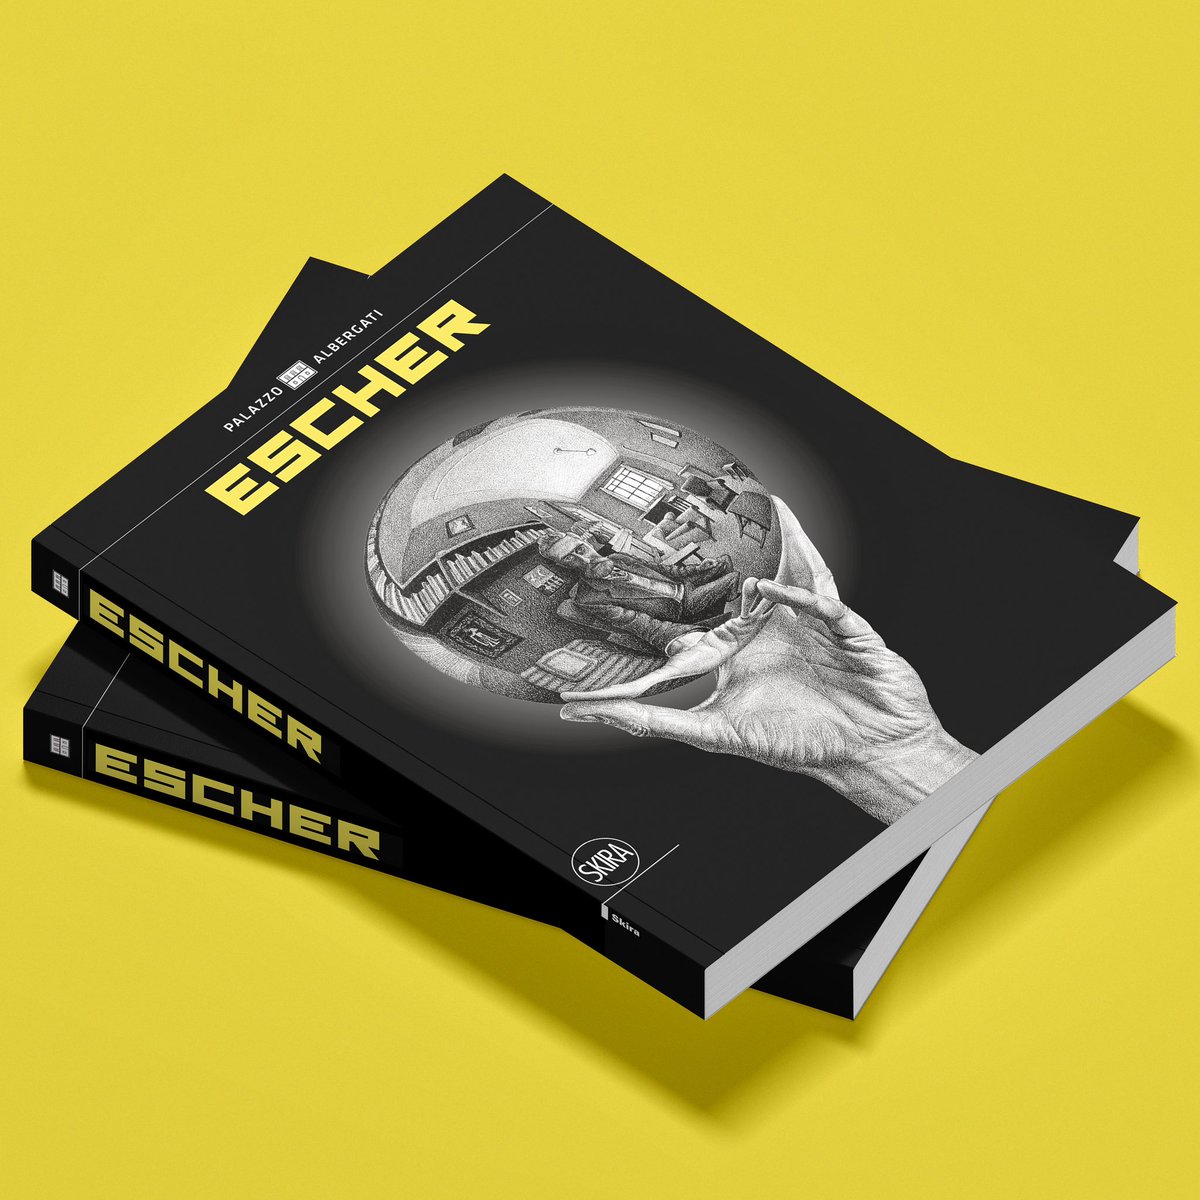 FPS art featured in the beautiful “Escher” #artbook. Work with us via link in bio.
•
#escher #mcescher #escherbook #fpsart #fatpunkstudioart #fpspublications #artbooklovers #bookdesign #bookpic #skira